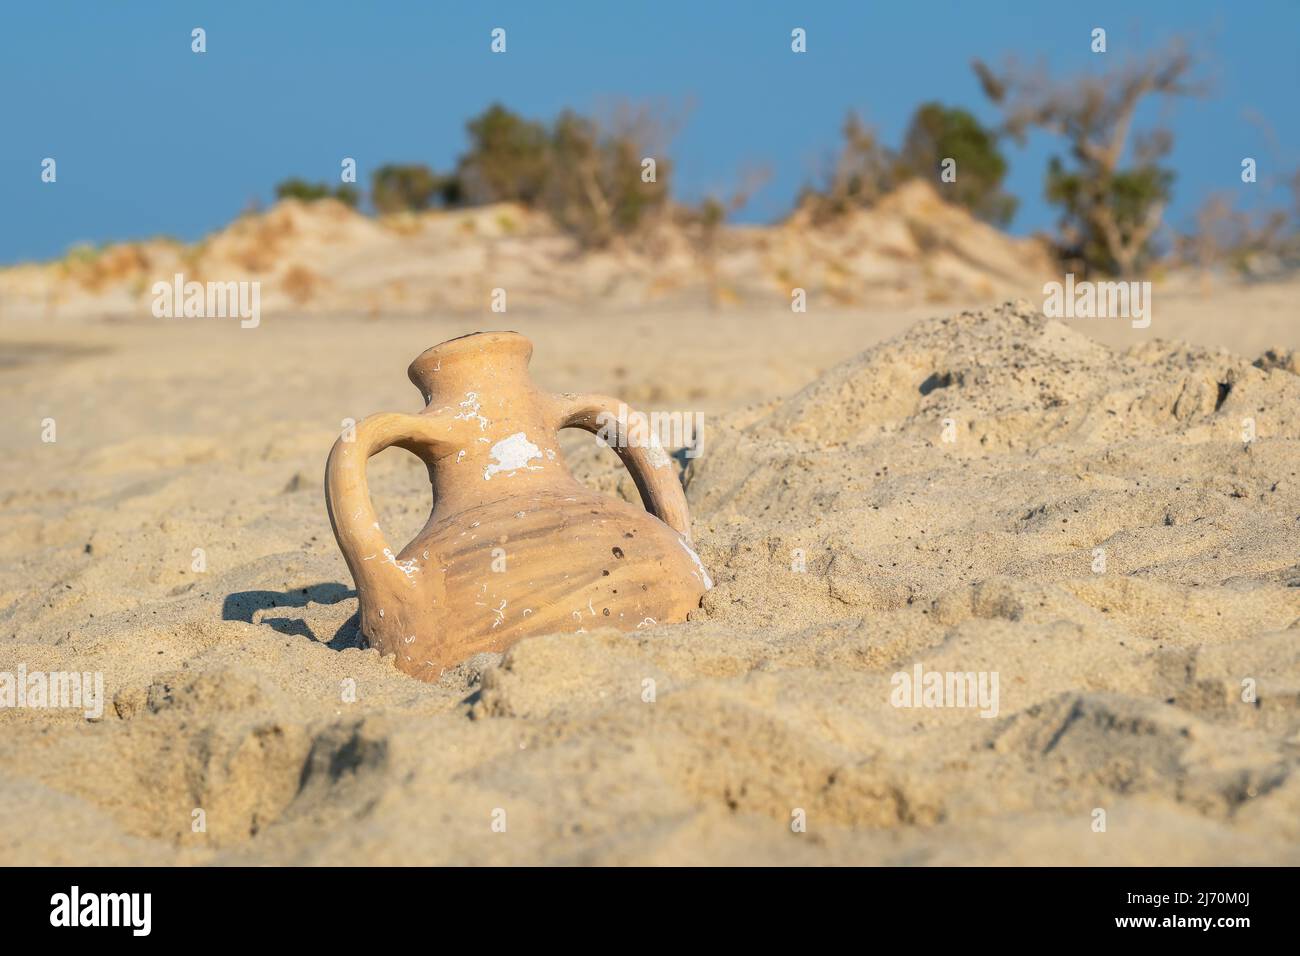 View to greek amphora on a sandy beach. Greece Stock Photo